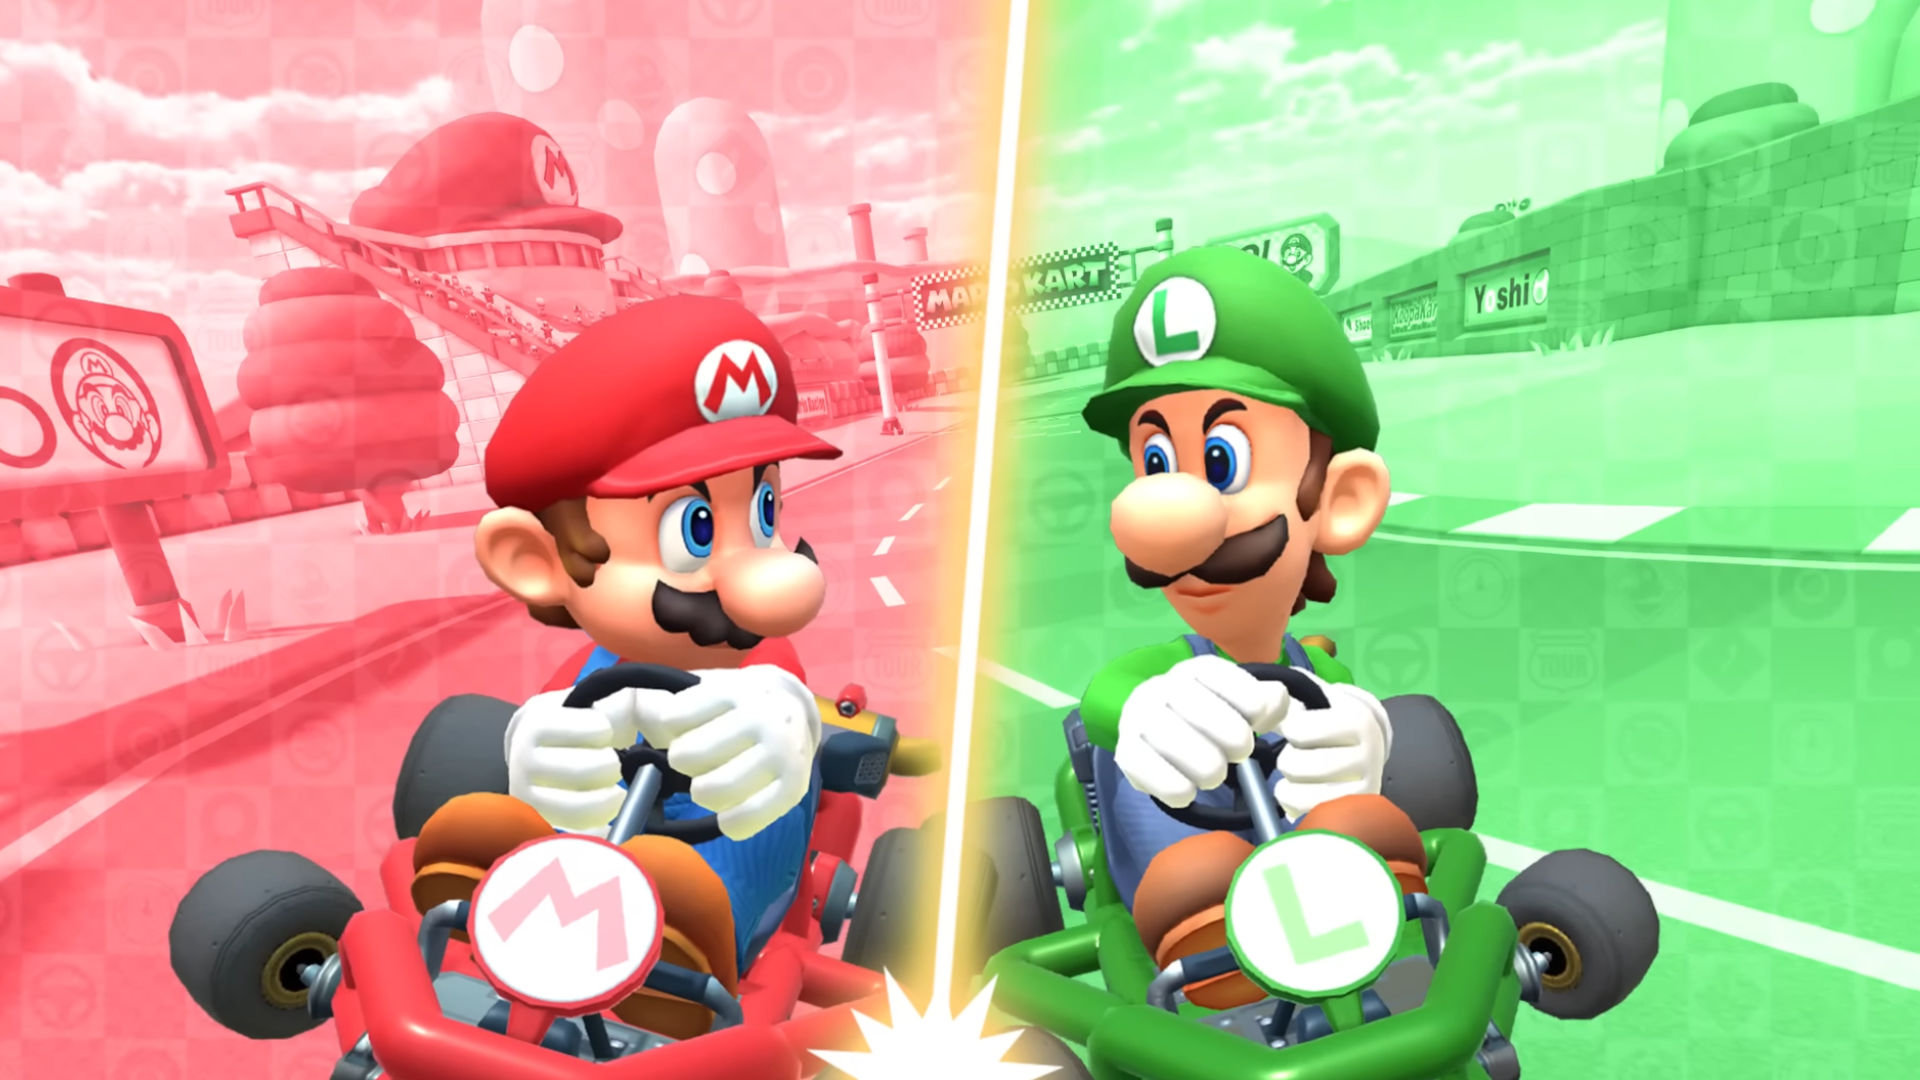 Mario And Luigi Go Head To Head In Mario Kart Tour's New Update